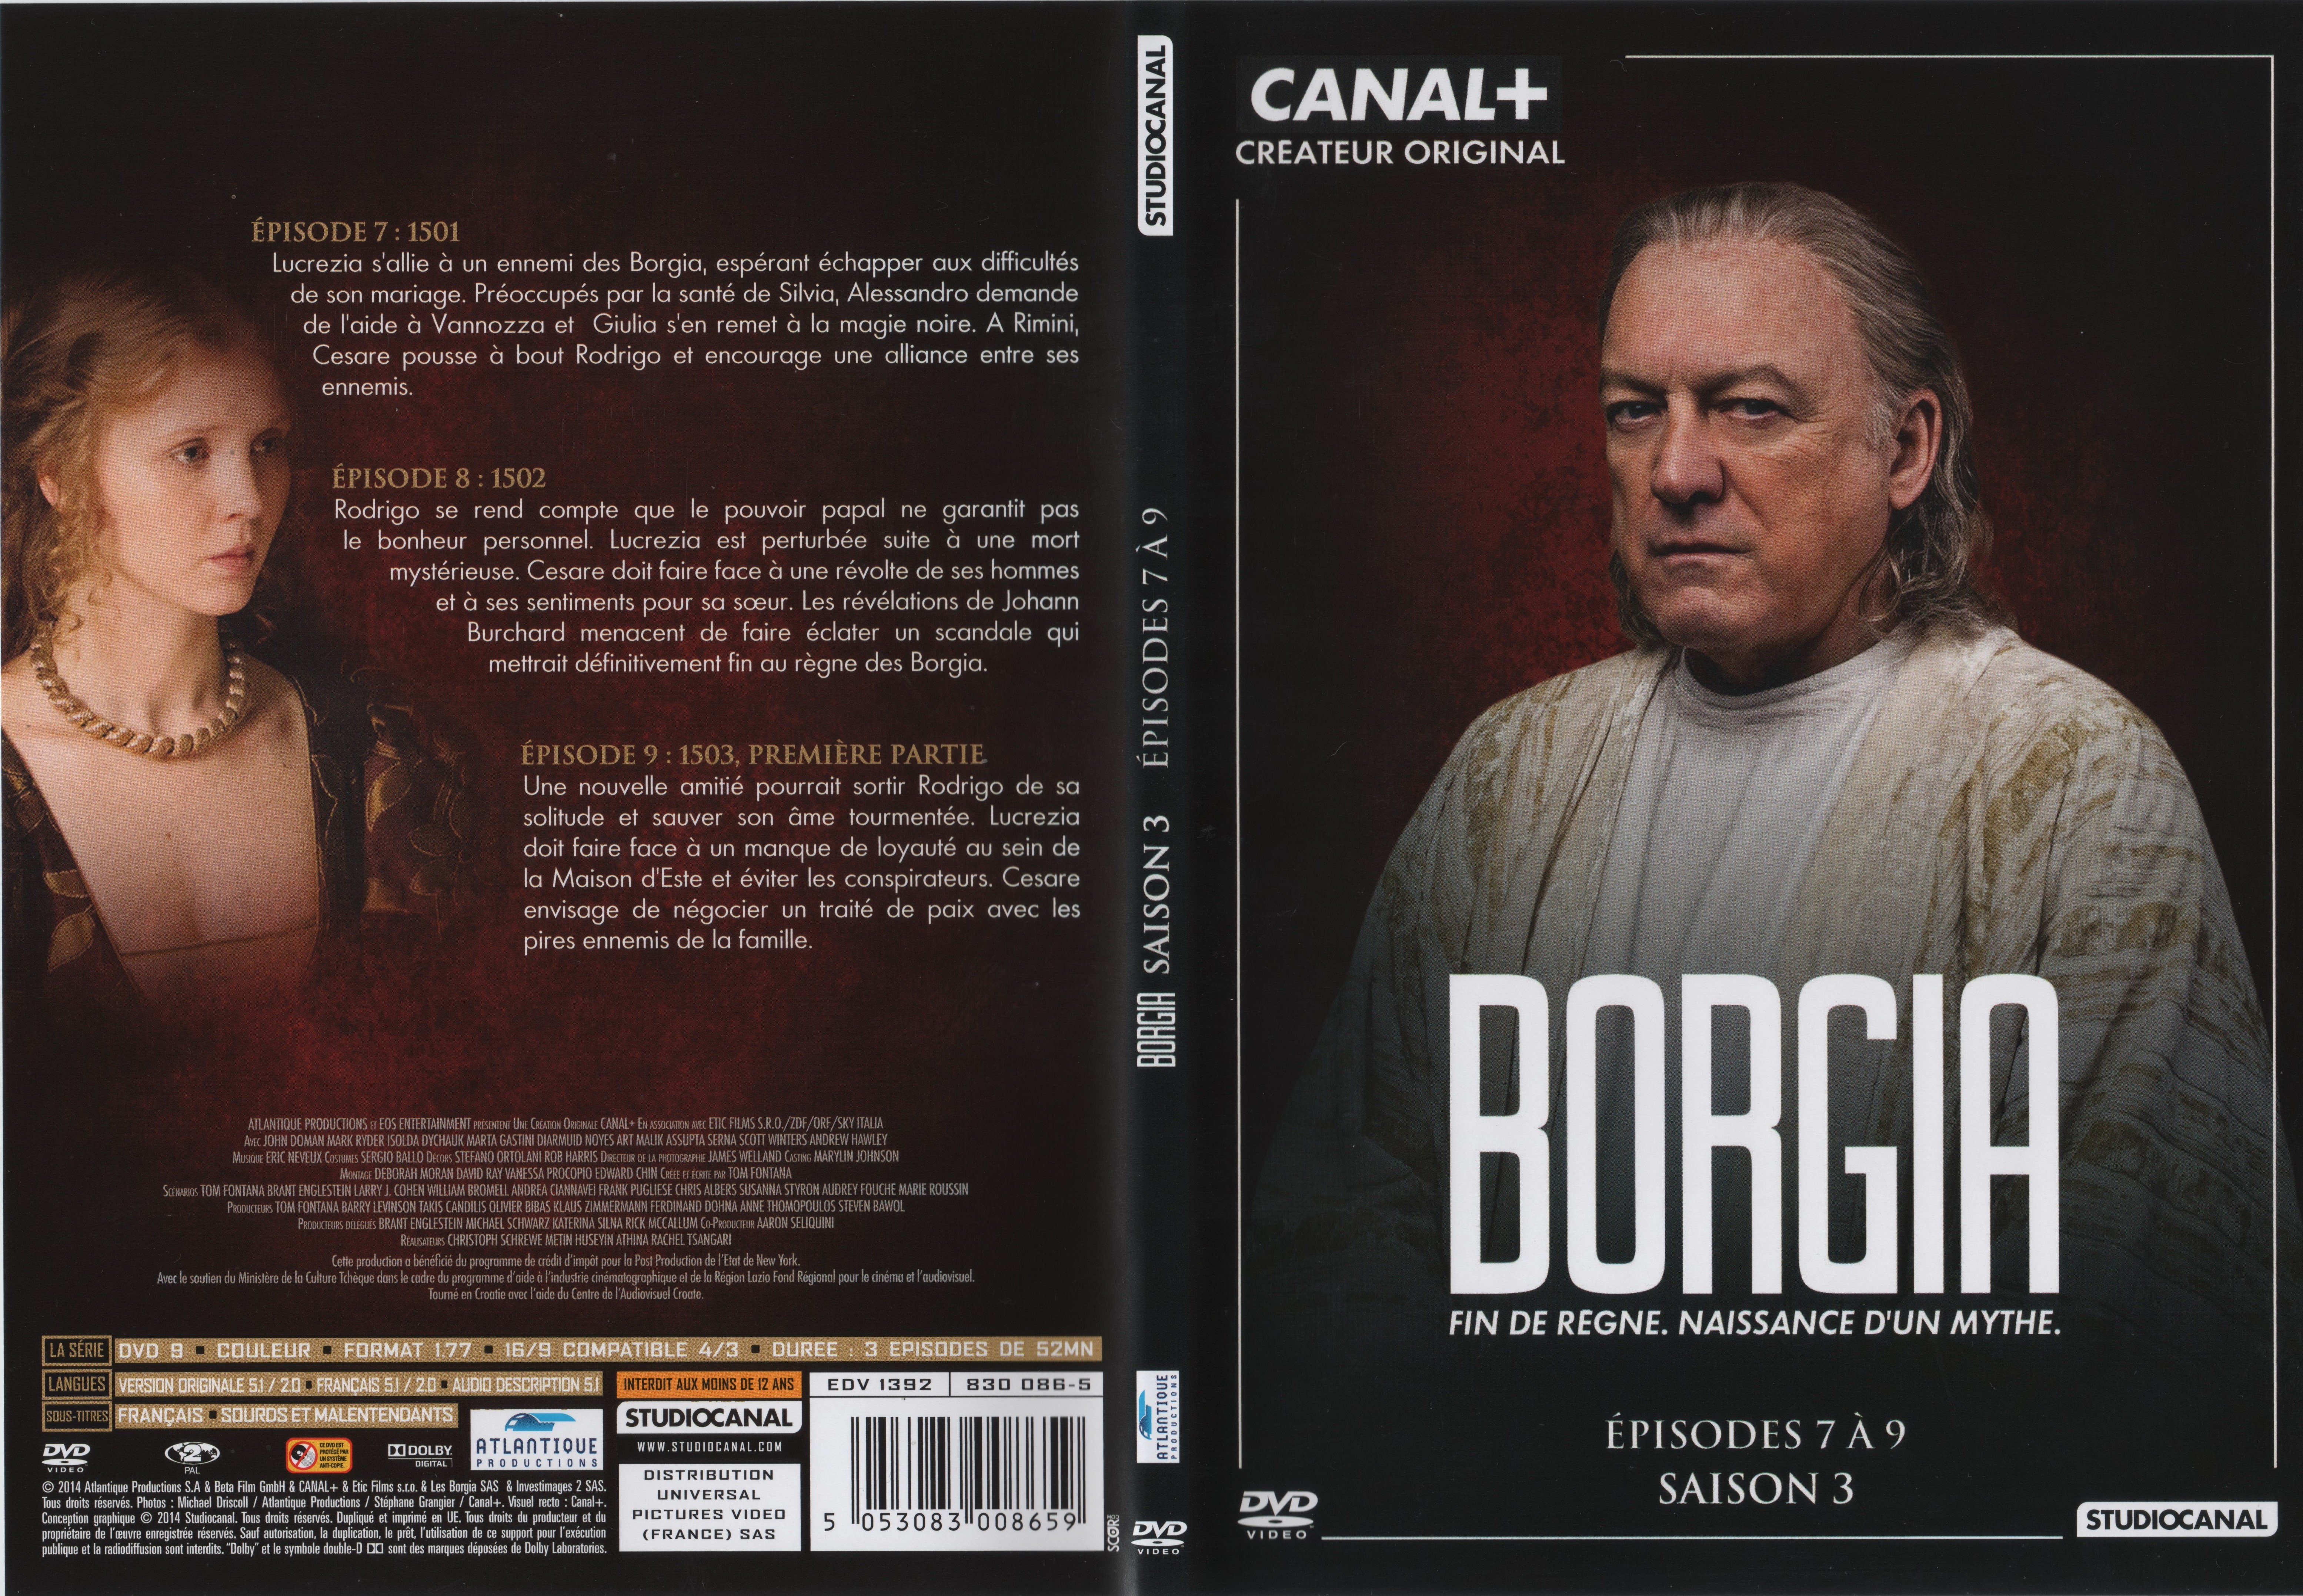 Jaquette DVD Borgia Saison 3 DVD 3